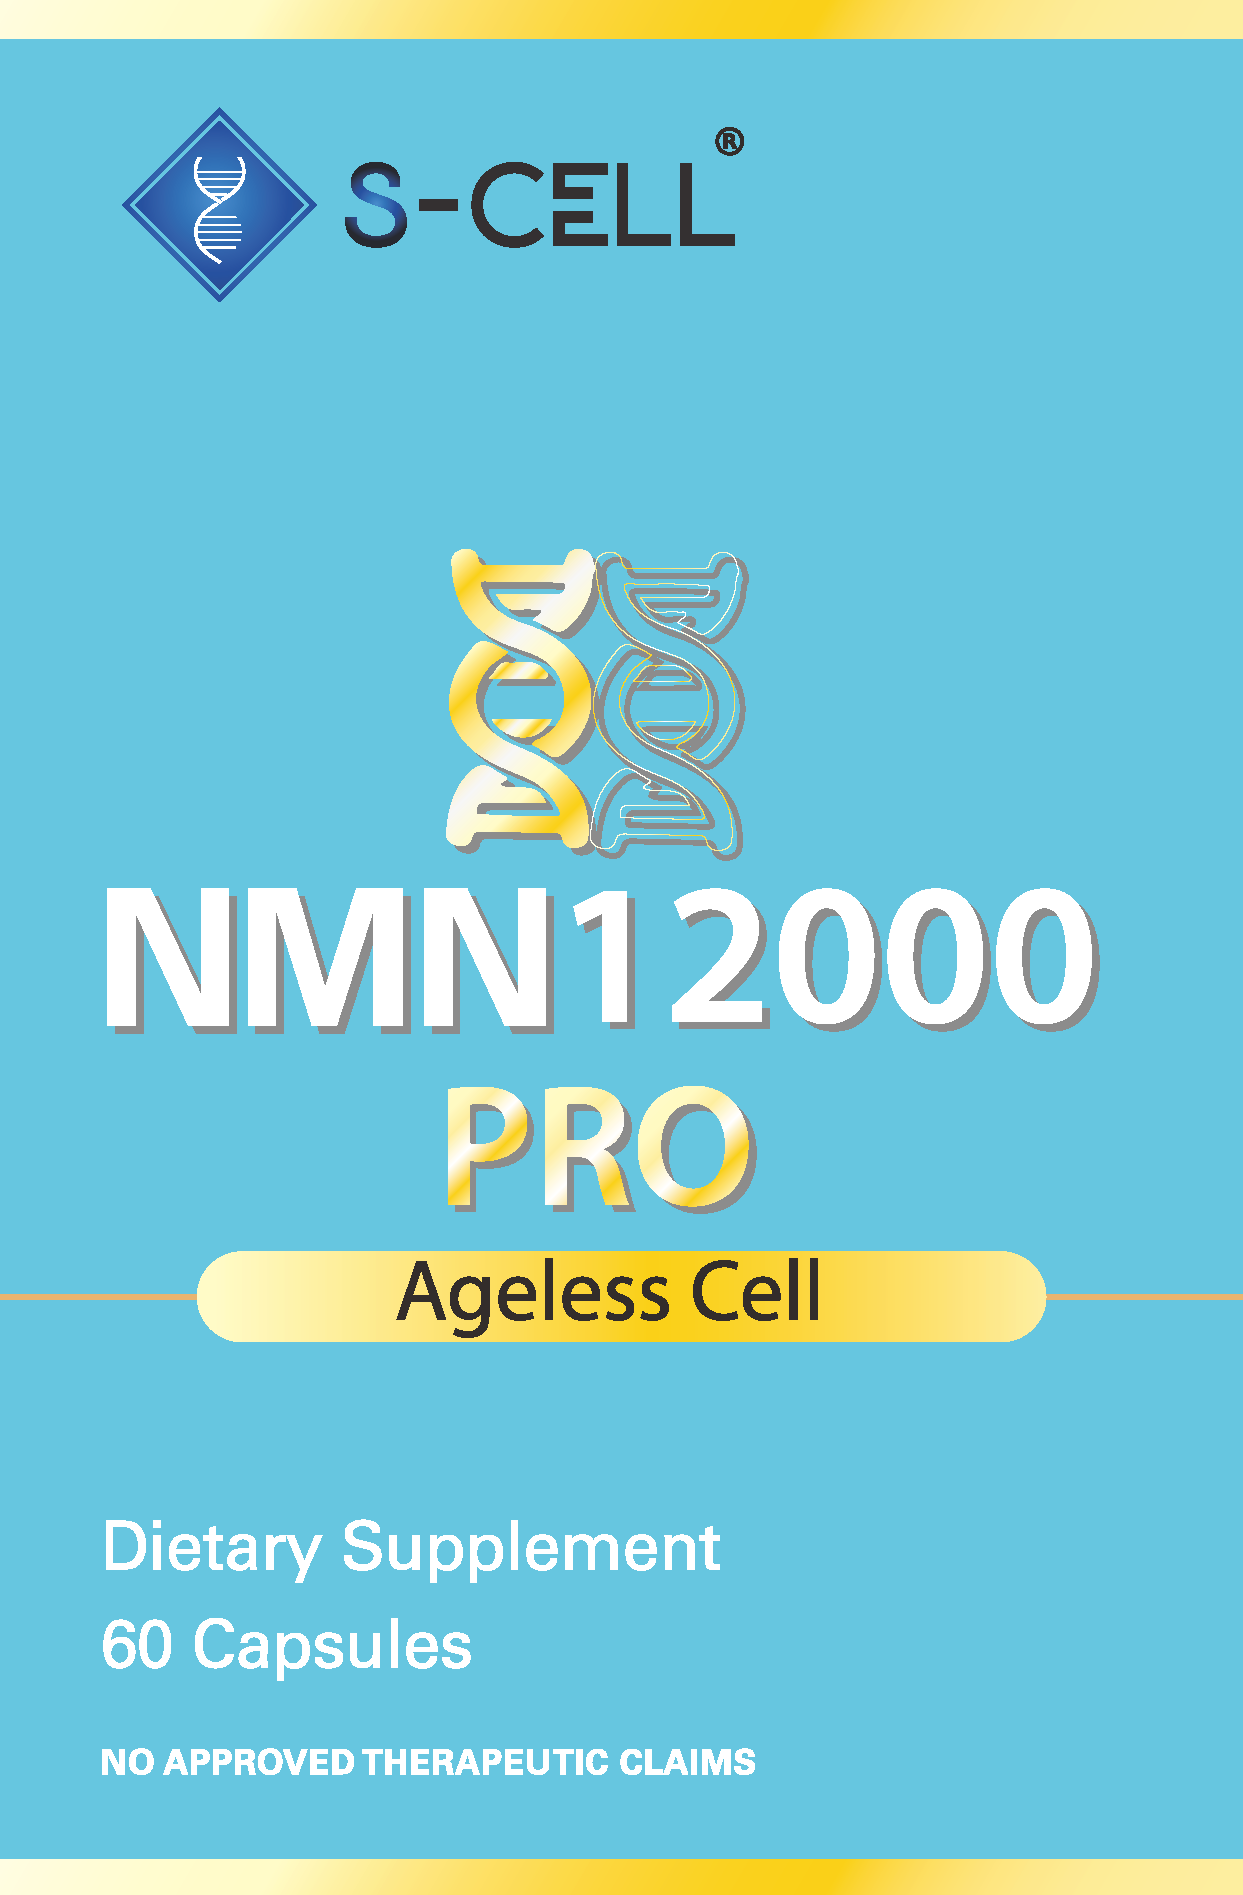 NMN 12000 PRO (復活節優惠)